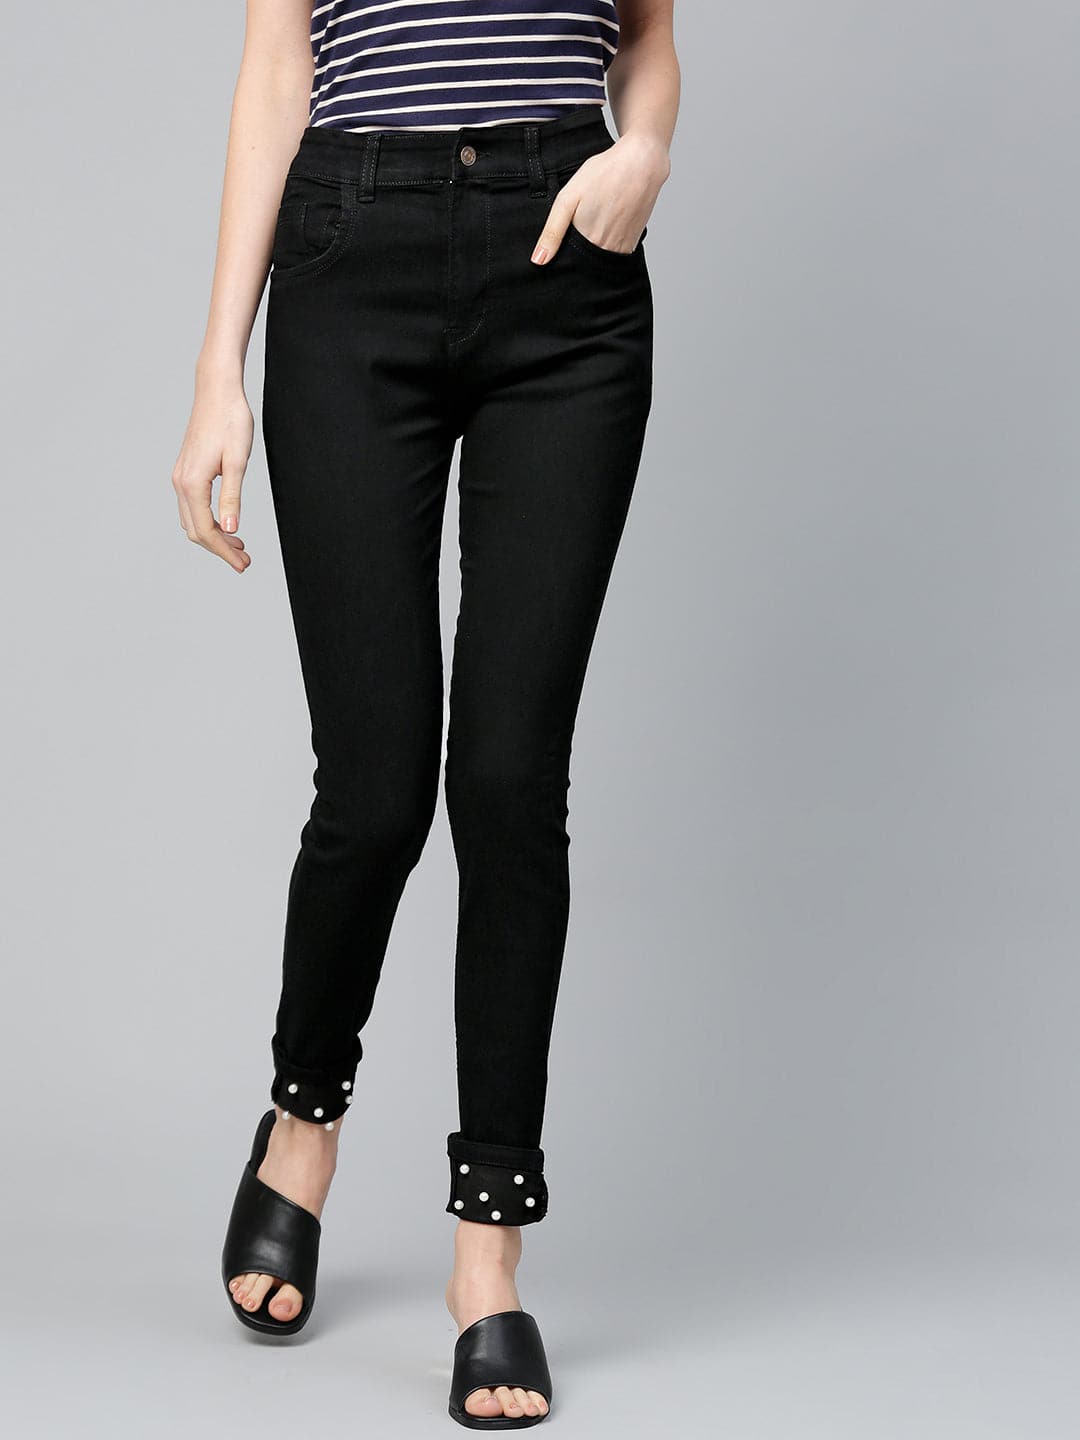 Black Pearl Studded Hem Jeans-Jeans-SASSAFRAS